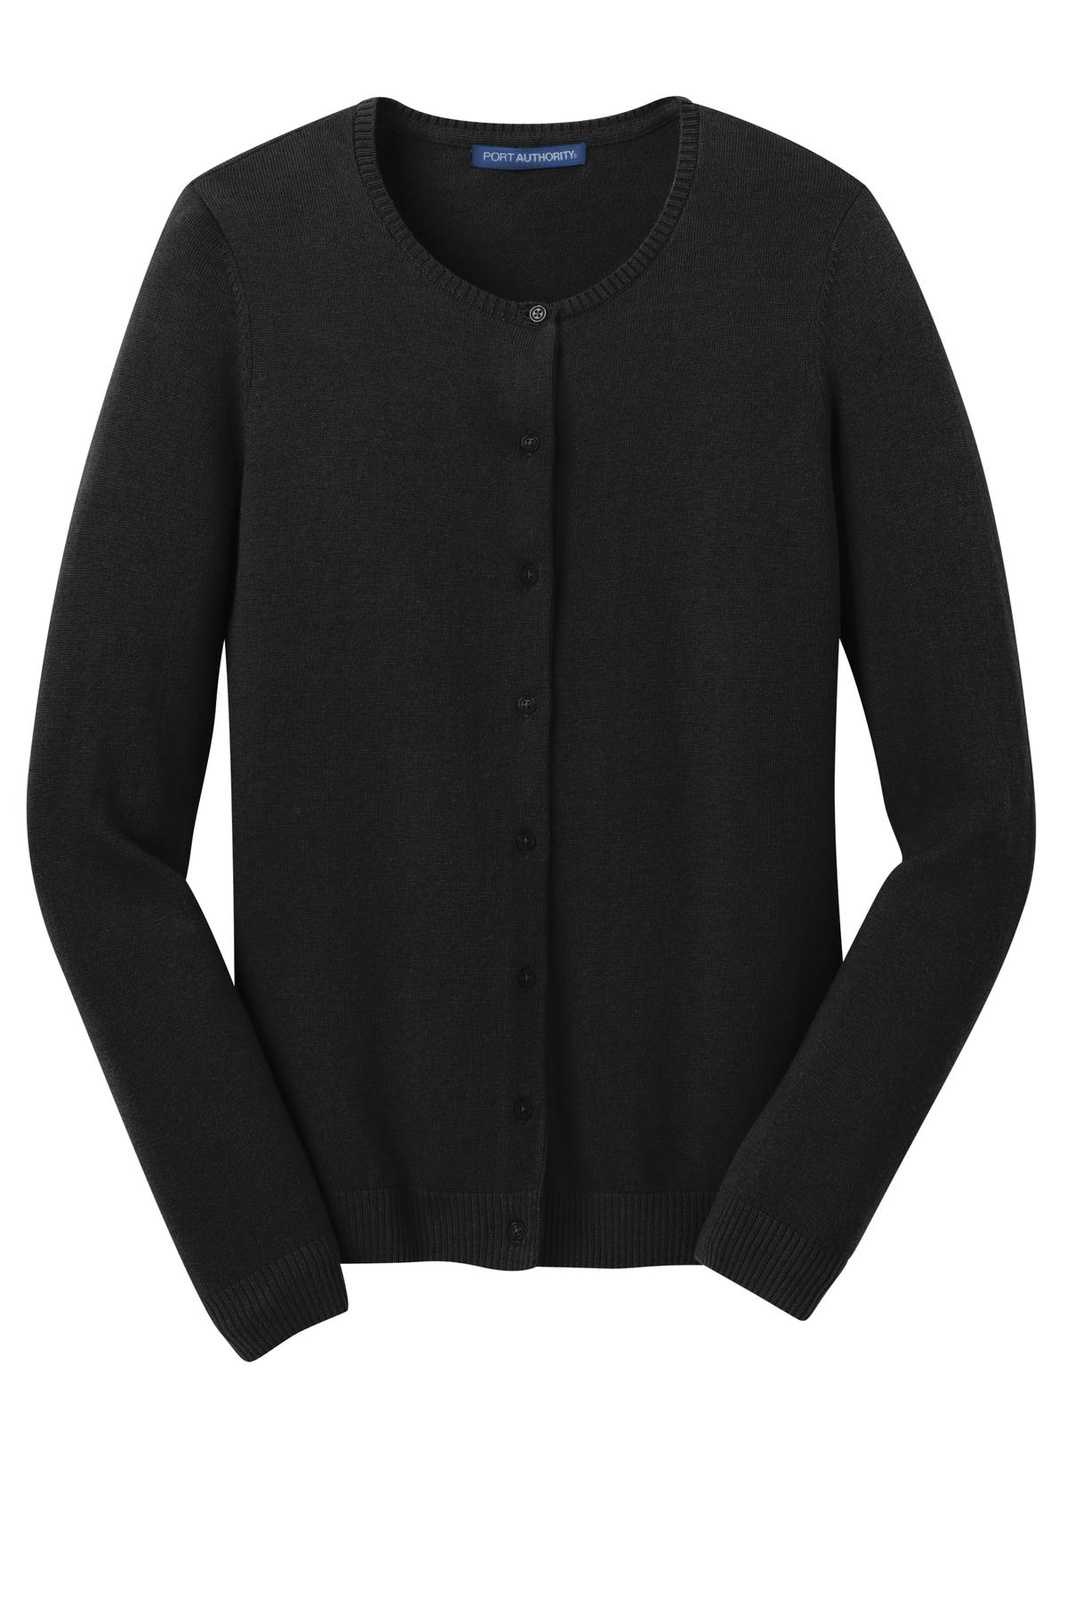 Port Authority LSW287 Ladies Cardigan Sweater - Black - HIT a Double - 5